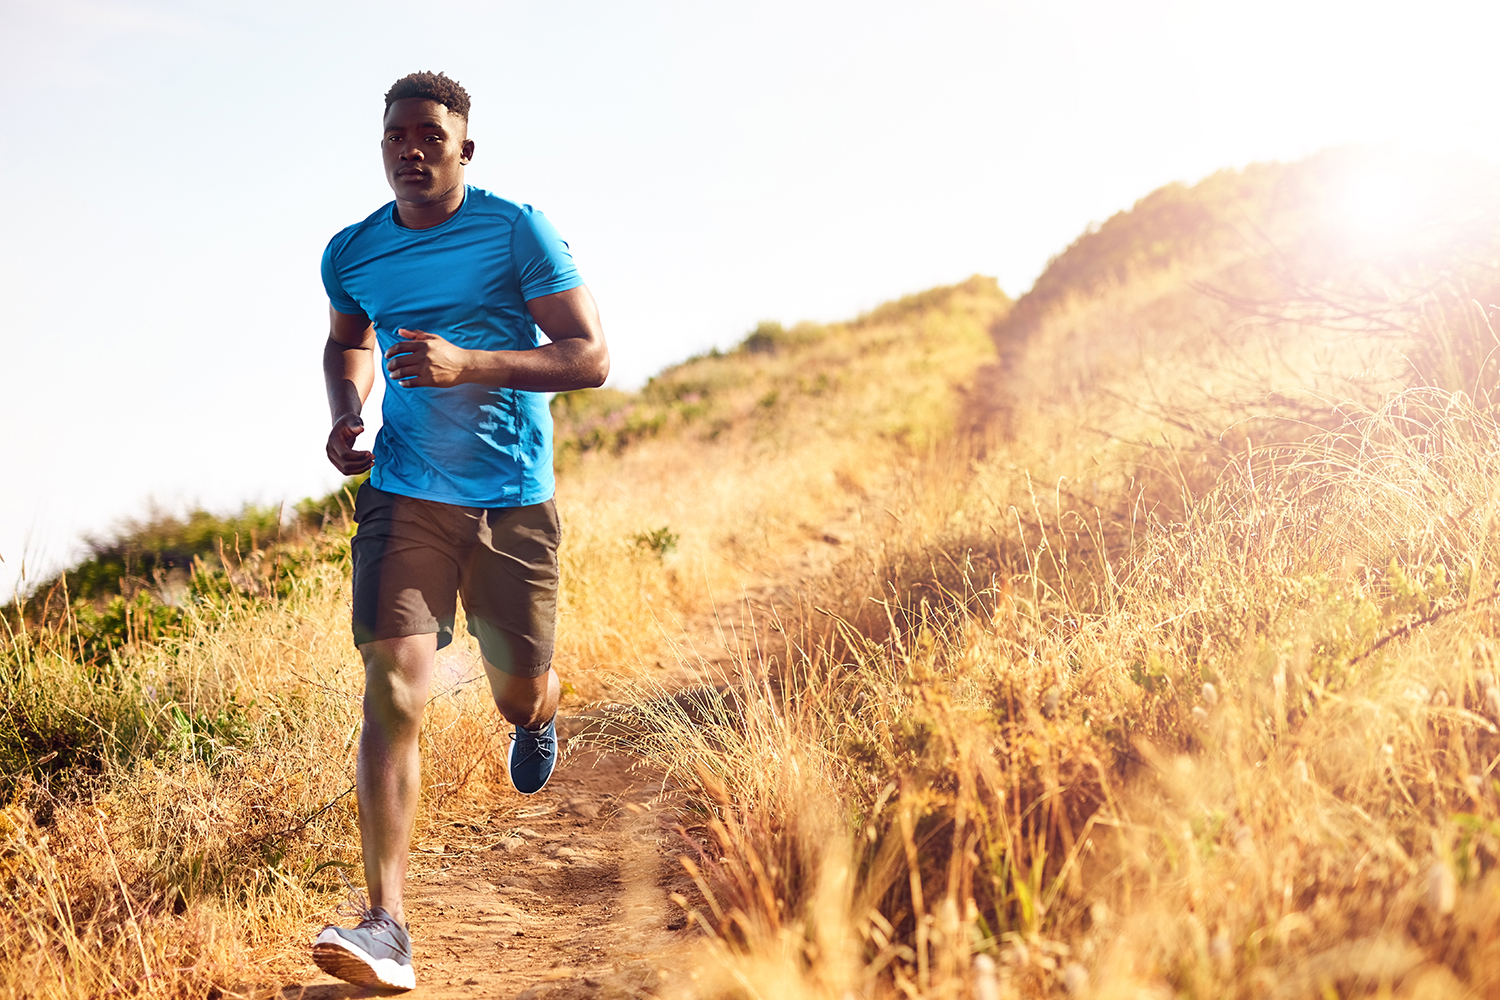 10 Surprising Benefits Of Jogging Everyday, Slow Jogging Benefits